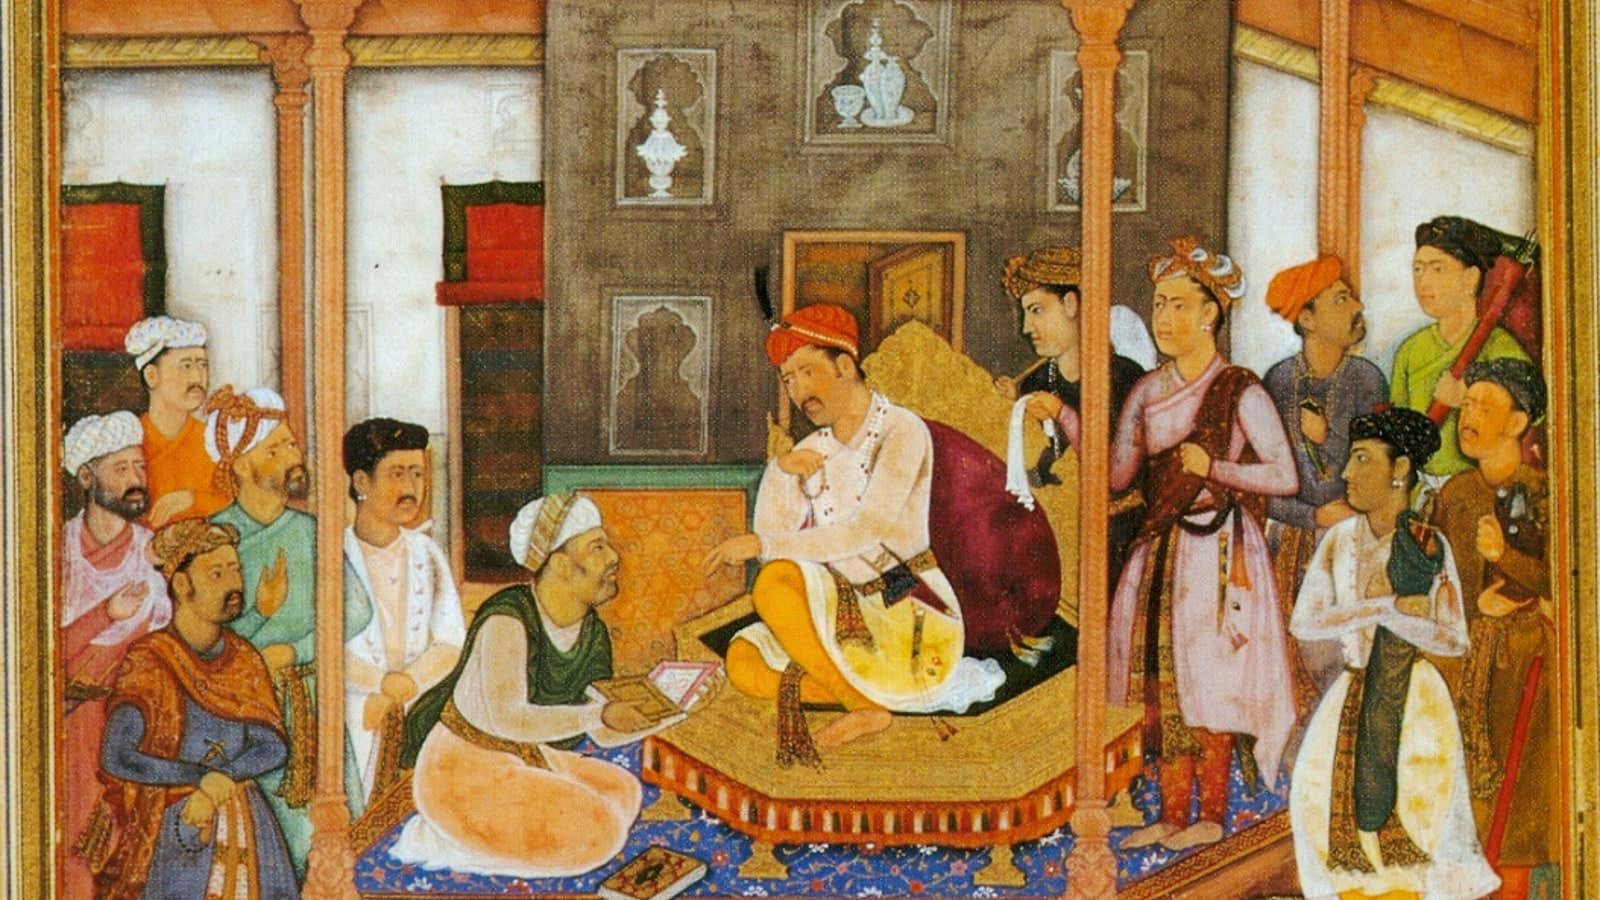 A scene from Akbar’s court.